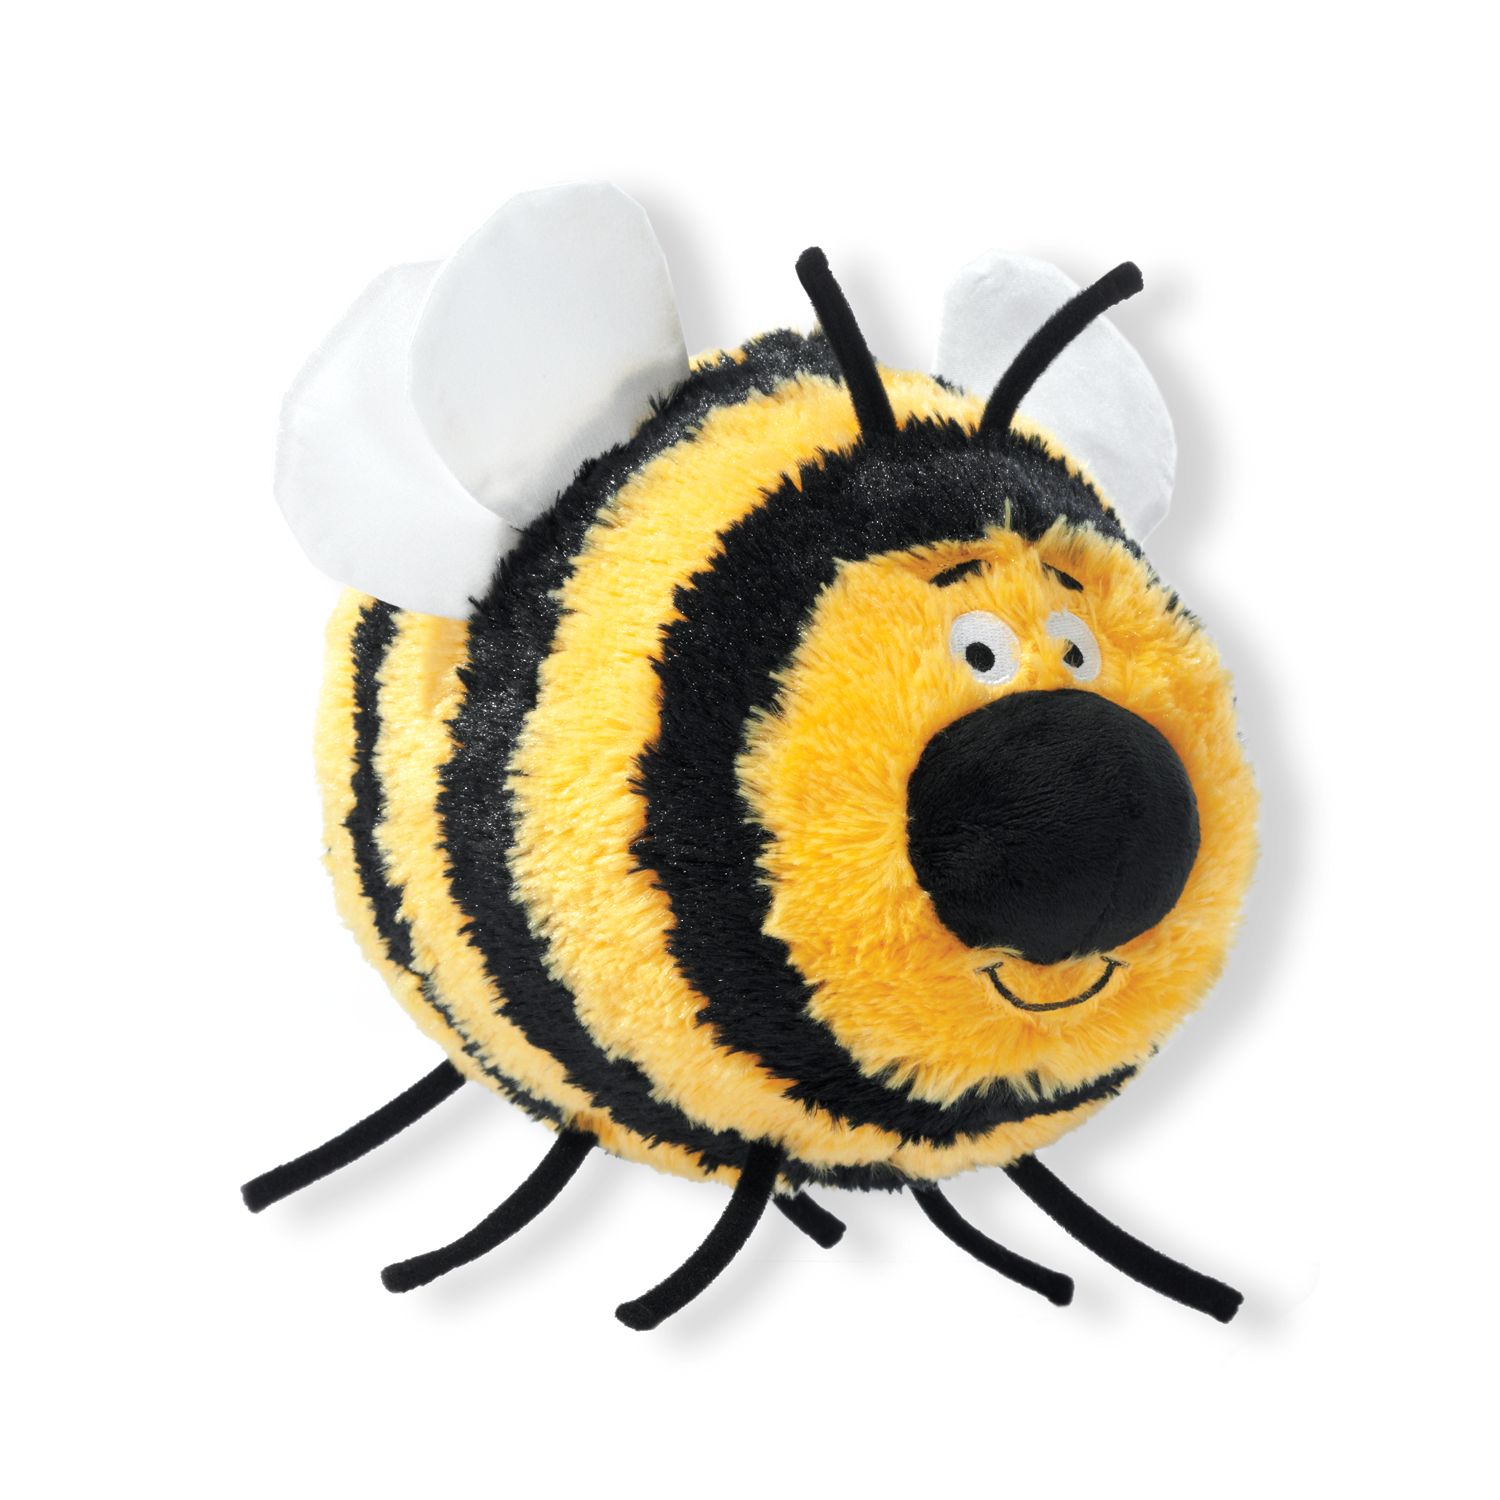 bumble bee plush toy